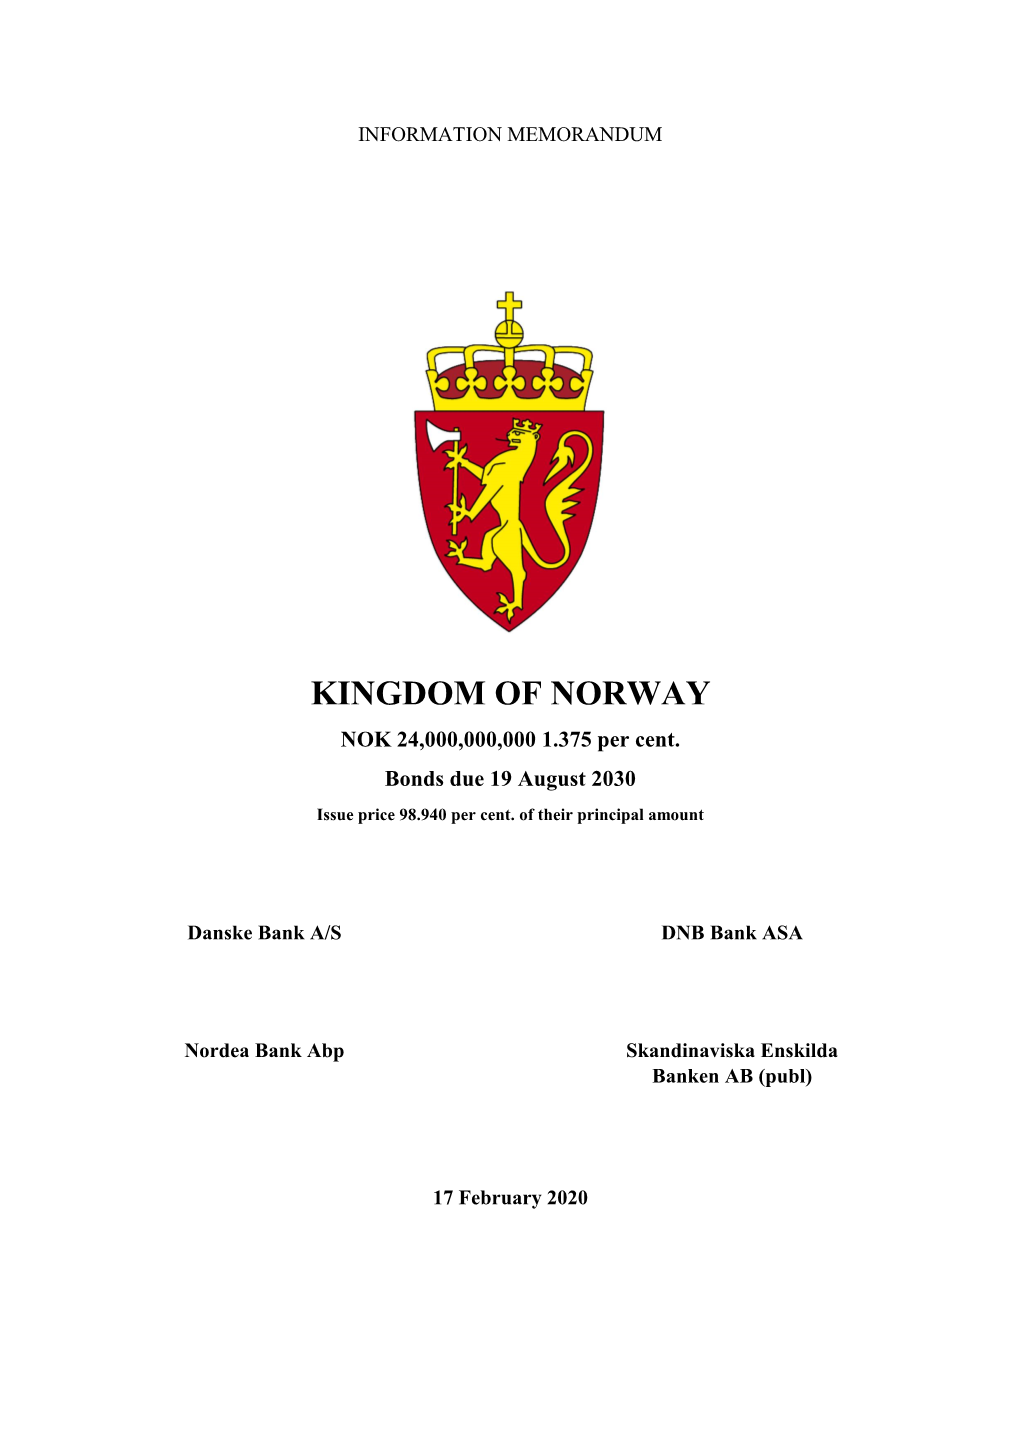 KINGDOM of NORWAY NOK 24,000,000,000 1.375 Per Cent